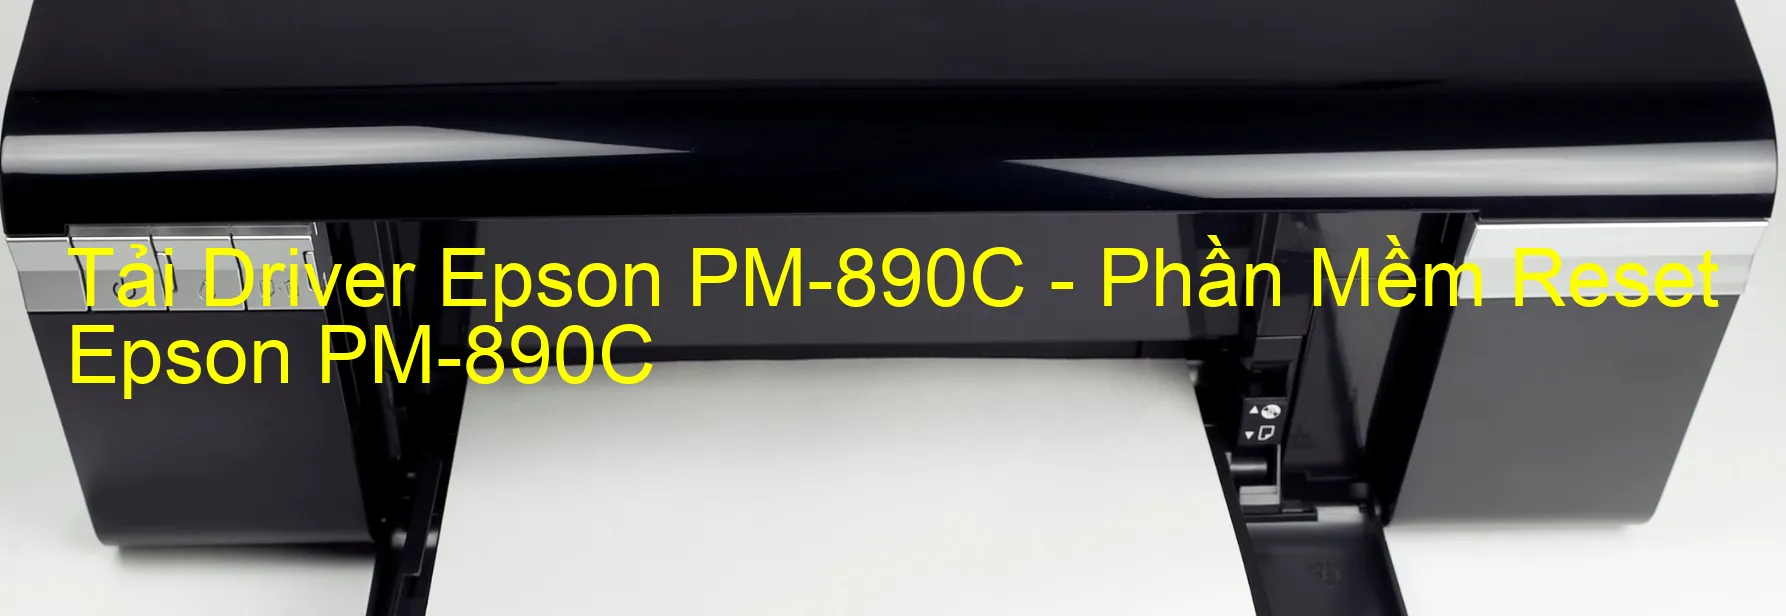 Driver Epson PM-890C, Phần Mềm Reset Epson PM-890C